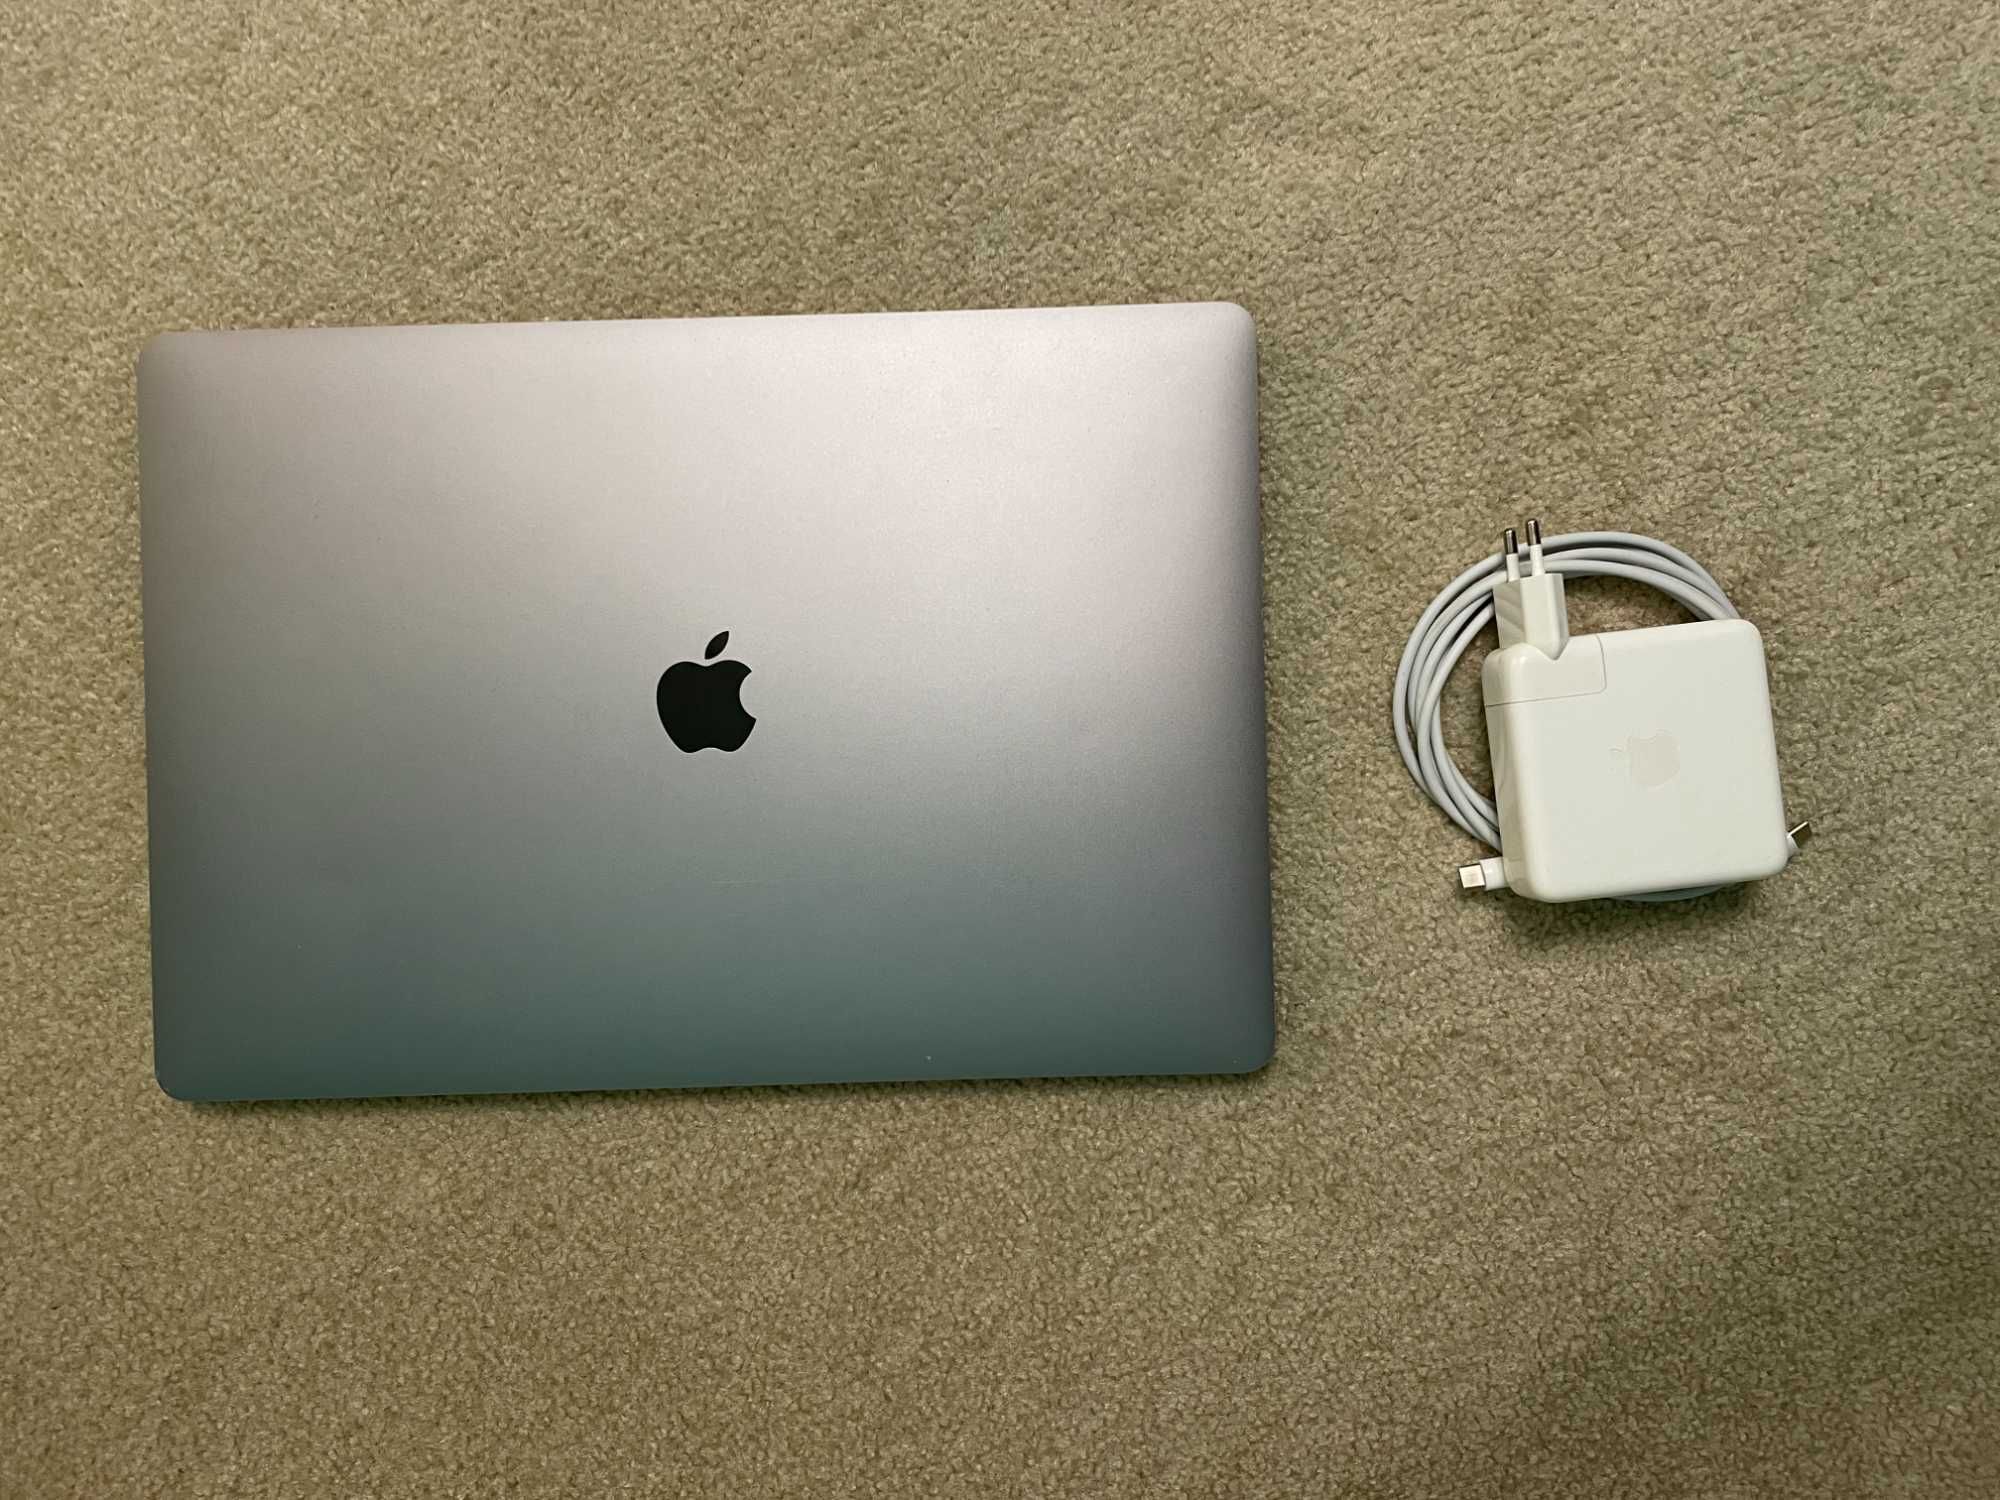 Ноутбук Apple Macbook Pro 16 A2141 2019 i9 64GB Radeon Pro 5500M 1TB